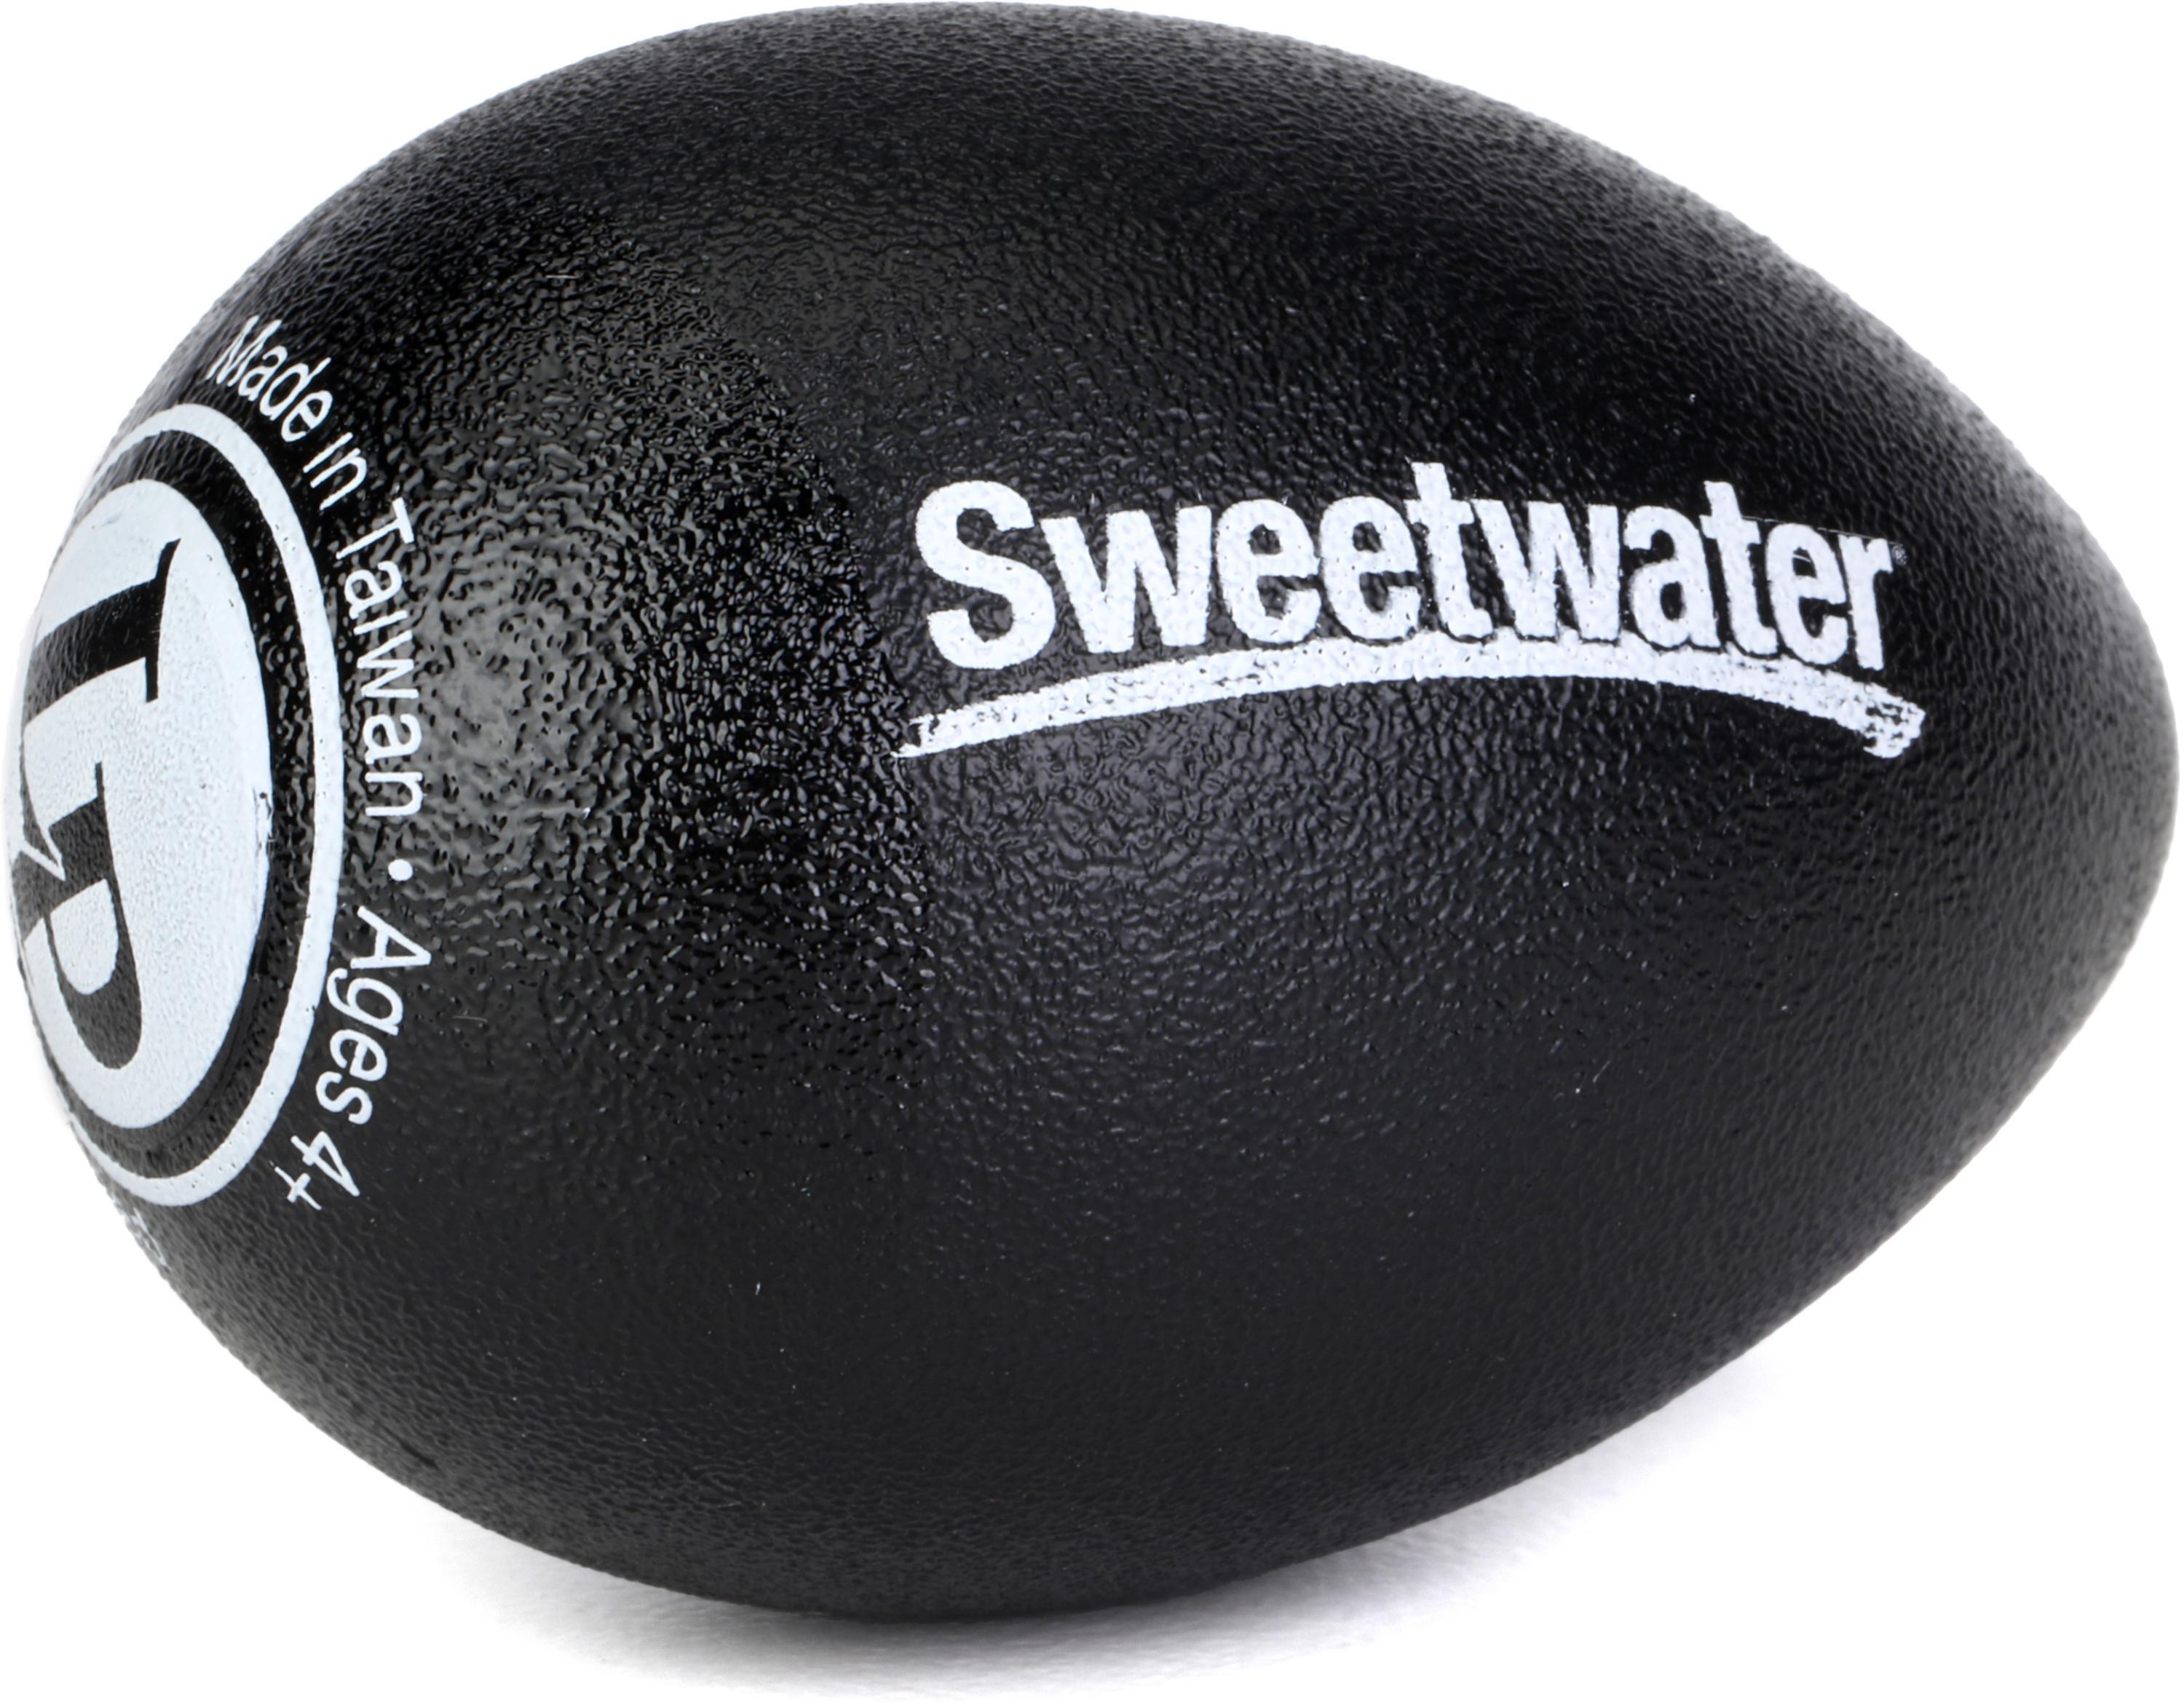 Bundled Item: Latin Percussion Sweetwater Egg Shaker - Black